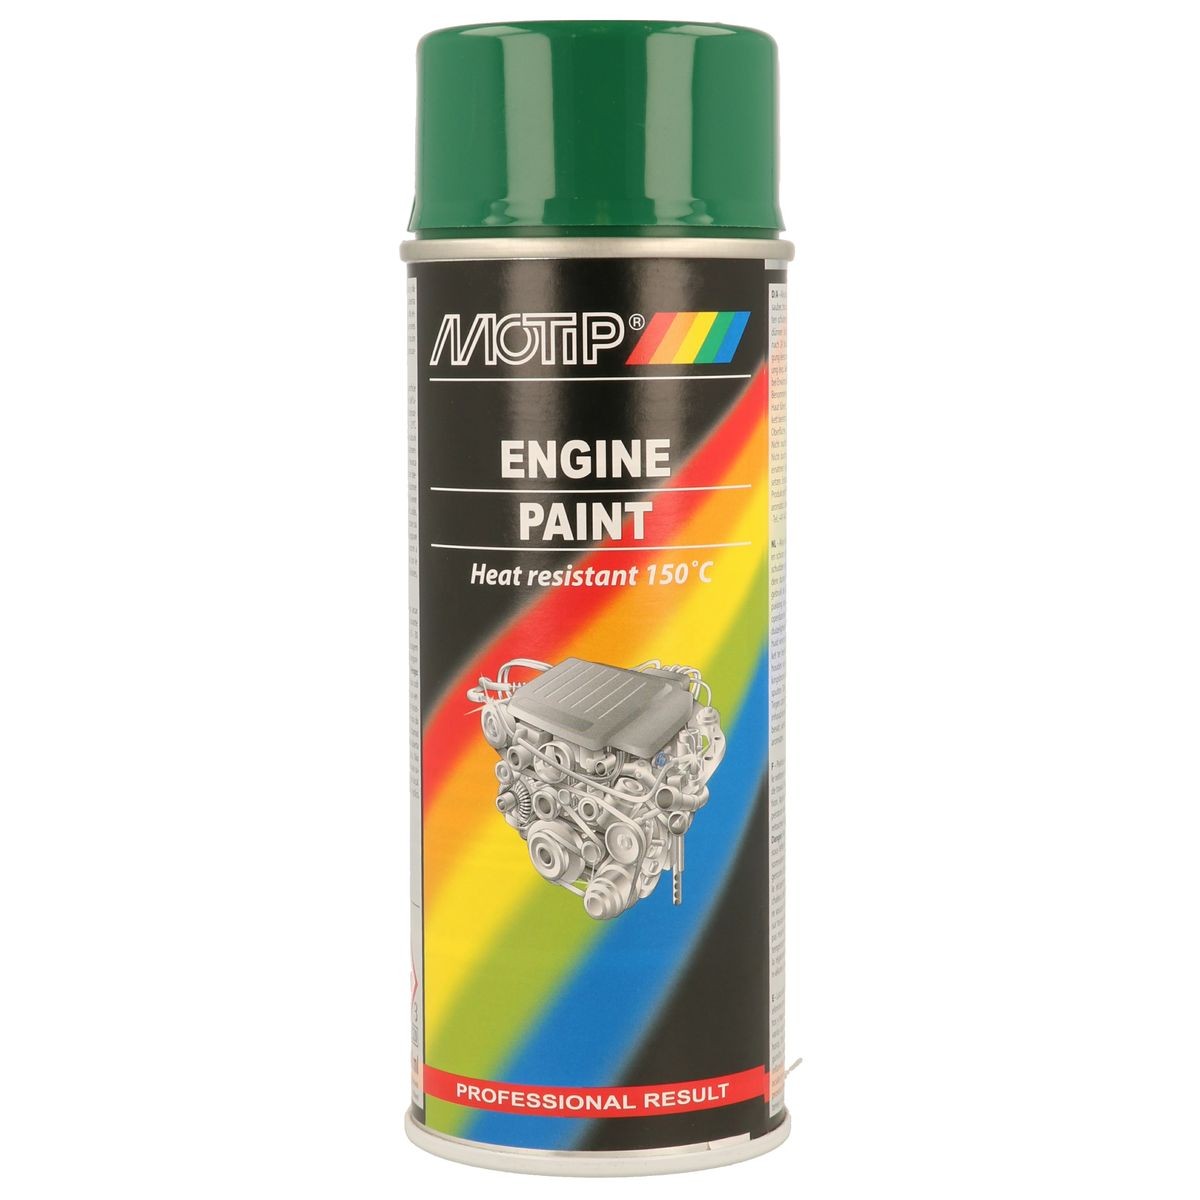 MOTIP Kompakt blue glossy 400 ml, green, Capacity: 400ml Engine- / Exhaust Paint 04095 buy